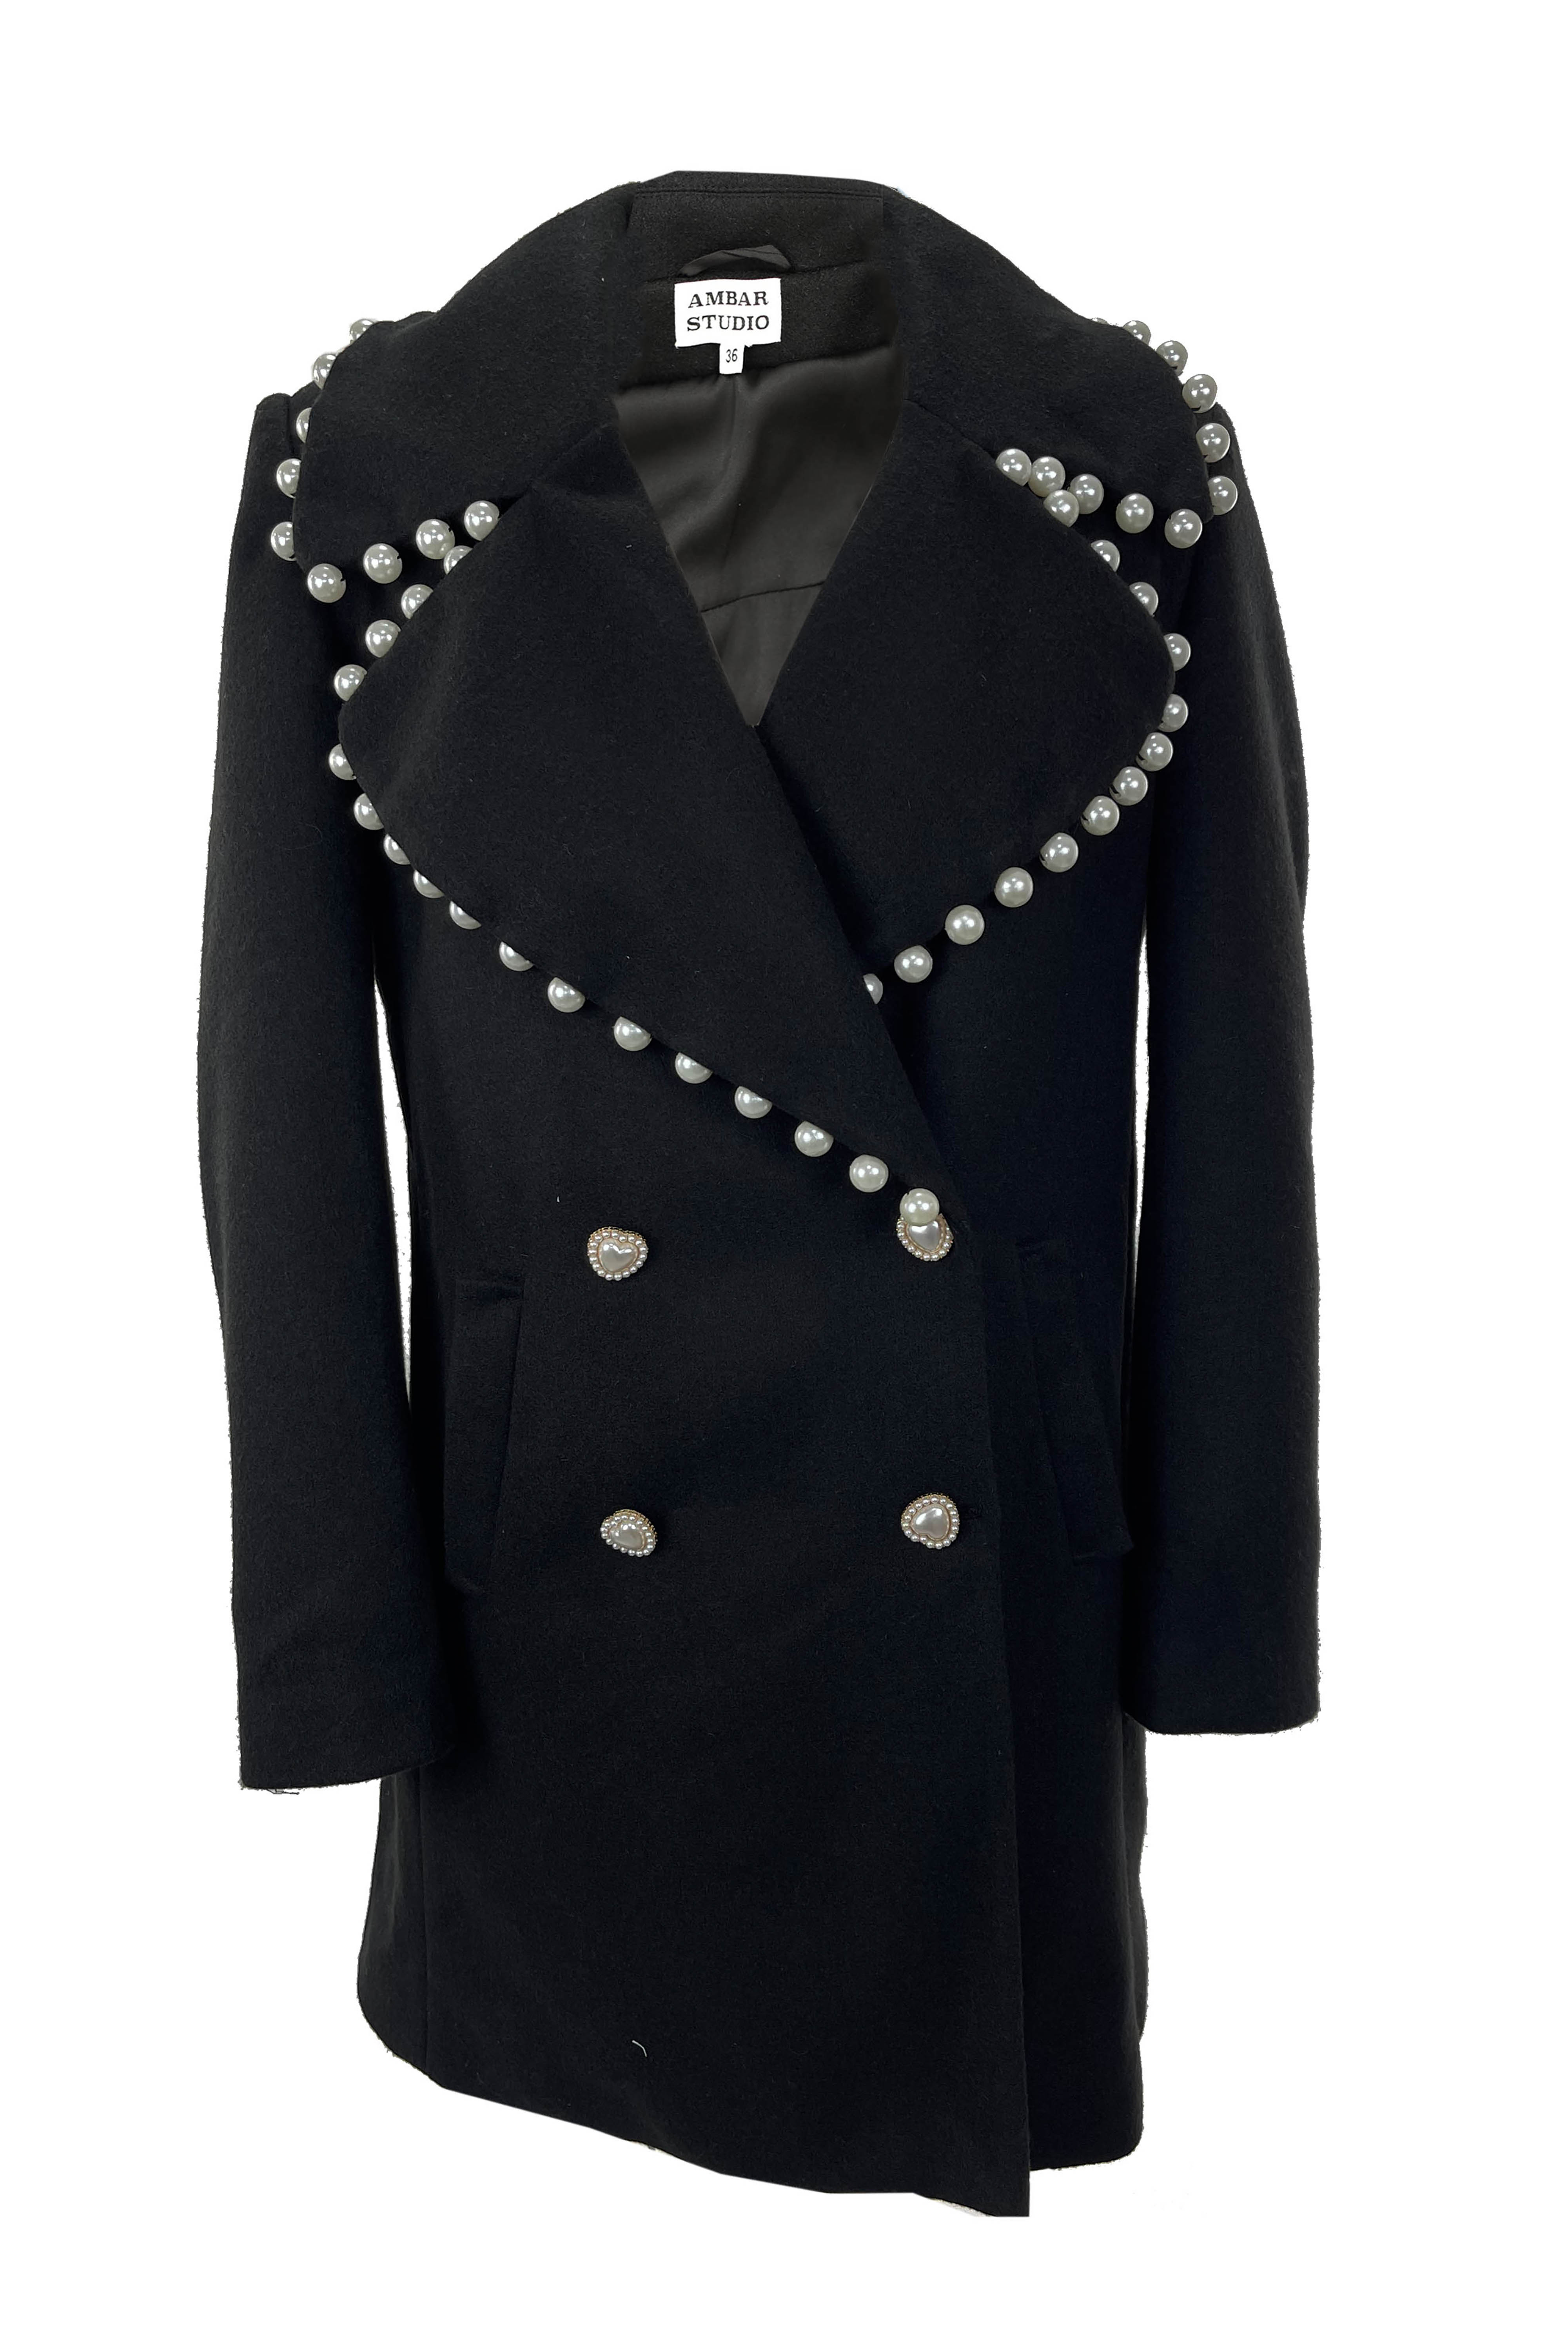 R24128 - BLACK 01 - AMIA black midi wool blend winter coat with pearls